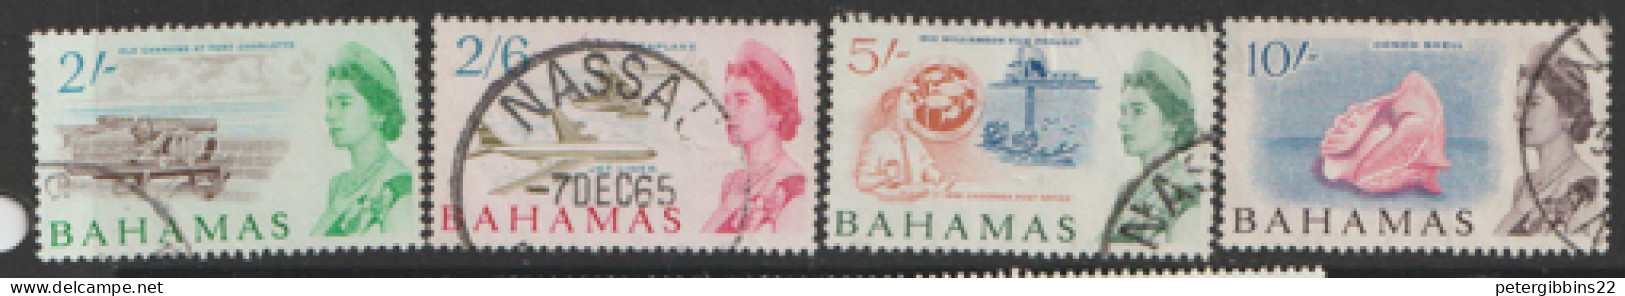 Bahamas 1965  SG 257-60  Fine Used - 1963-1973 Autonomía Interna